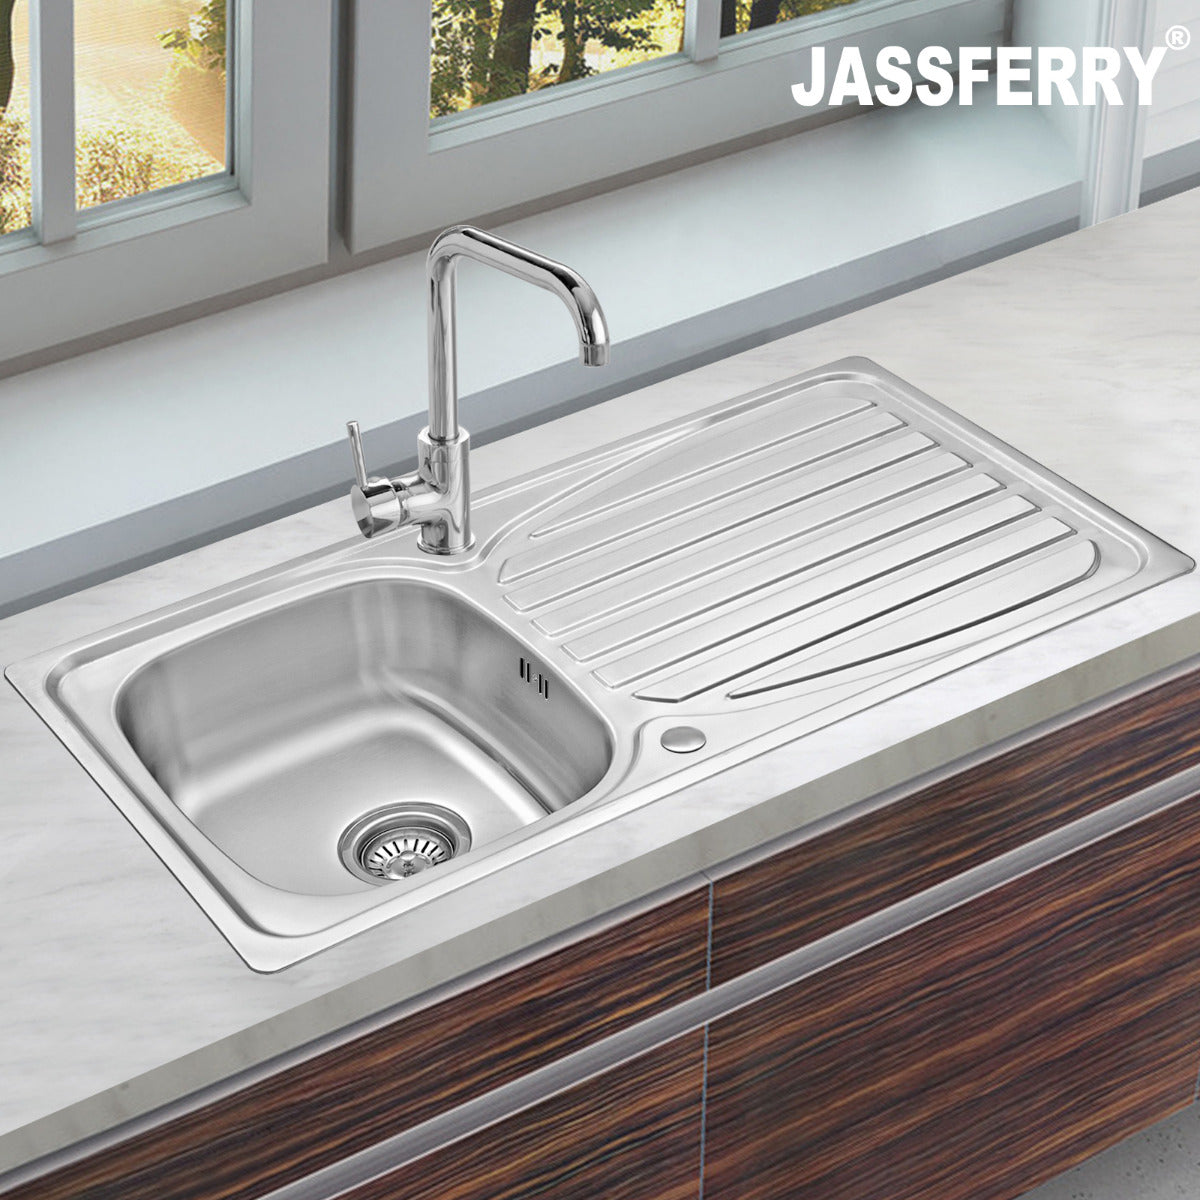 JassferryJASSFERRY Inset Stainless Steel Kitchen Sink Single 1 Bowl Reversible DrainerKitchen Sinks